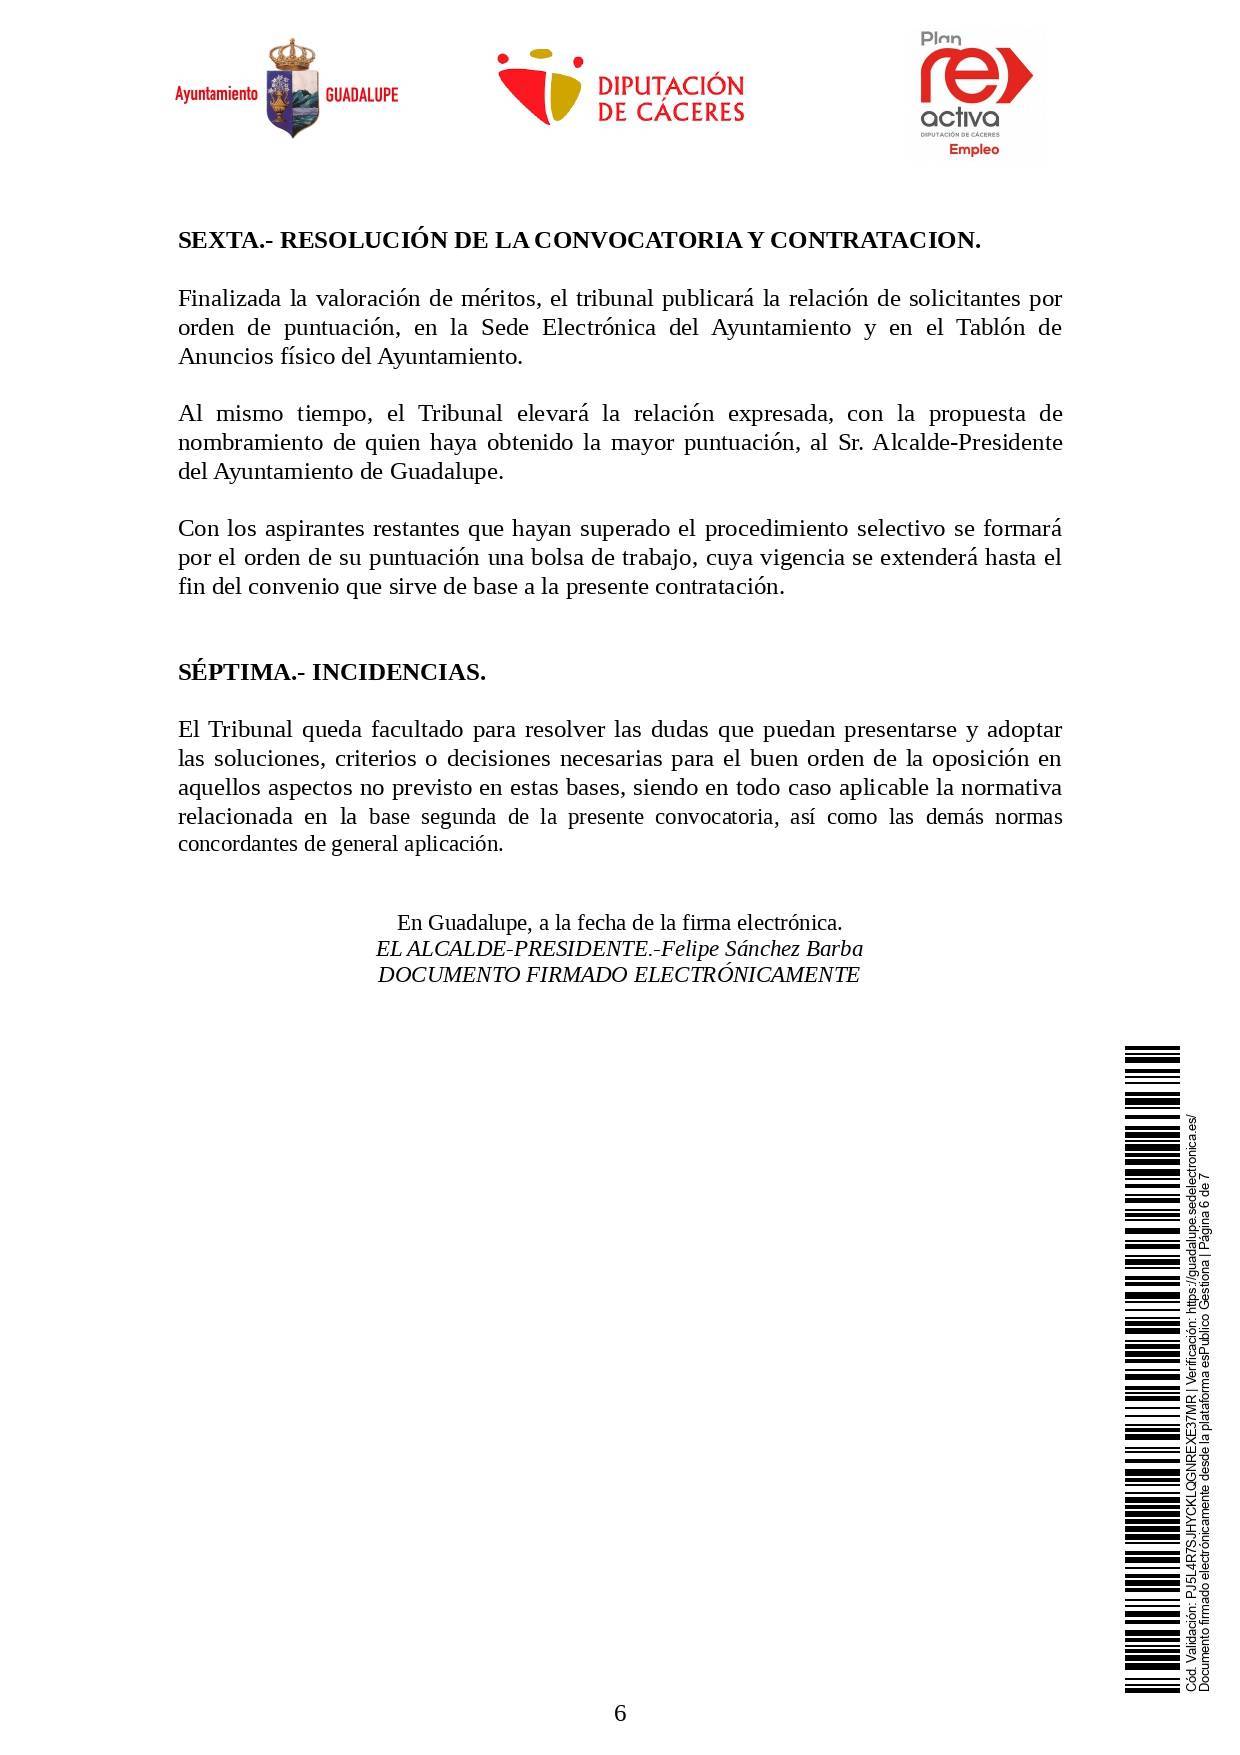 Un operario-a de servicios múltiples y dos operarios-as de limpieza (2021) - Guadalupe (Cáceres) 6